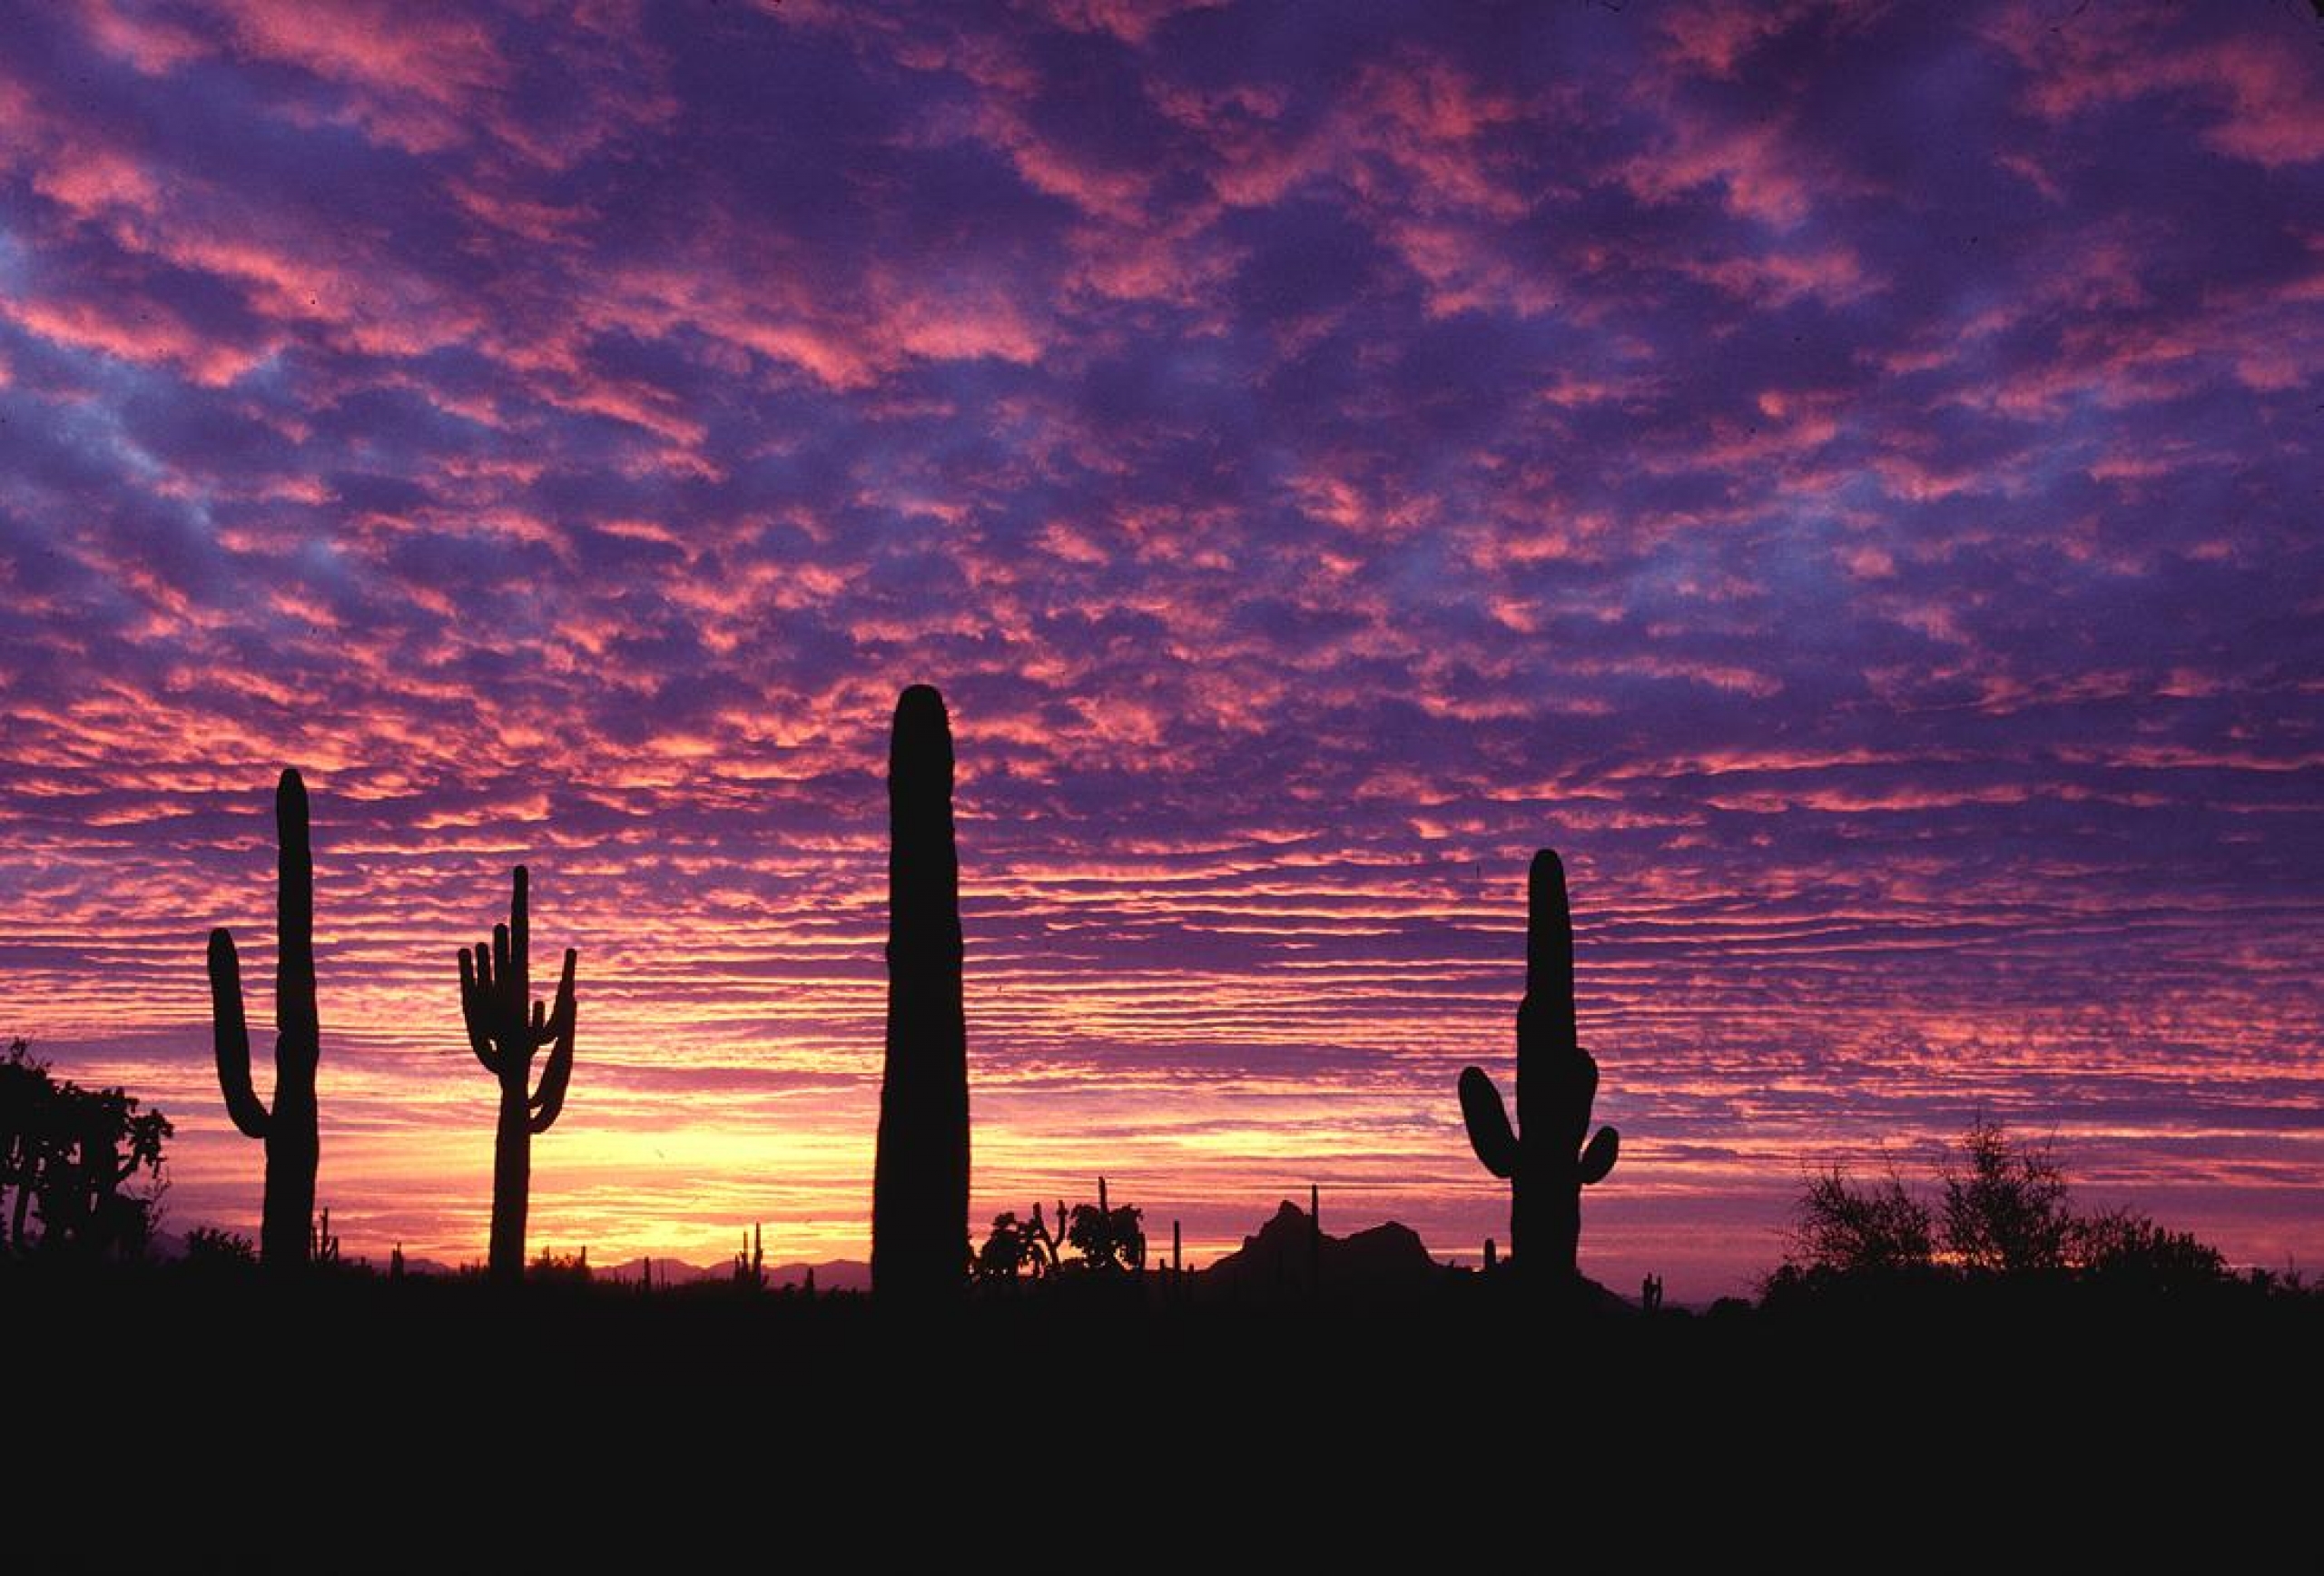  together Arizona sunset serves inspiration wallpapers backgrounds